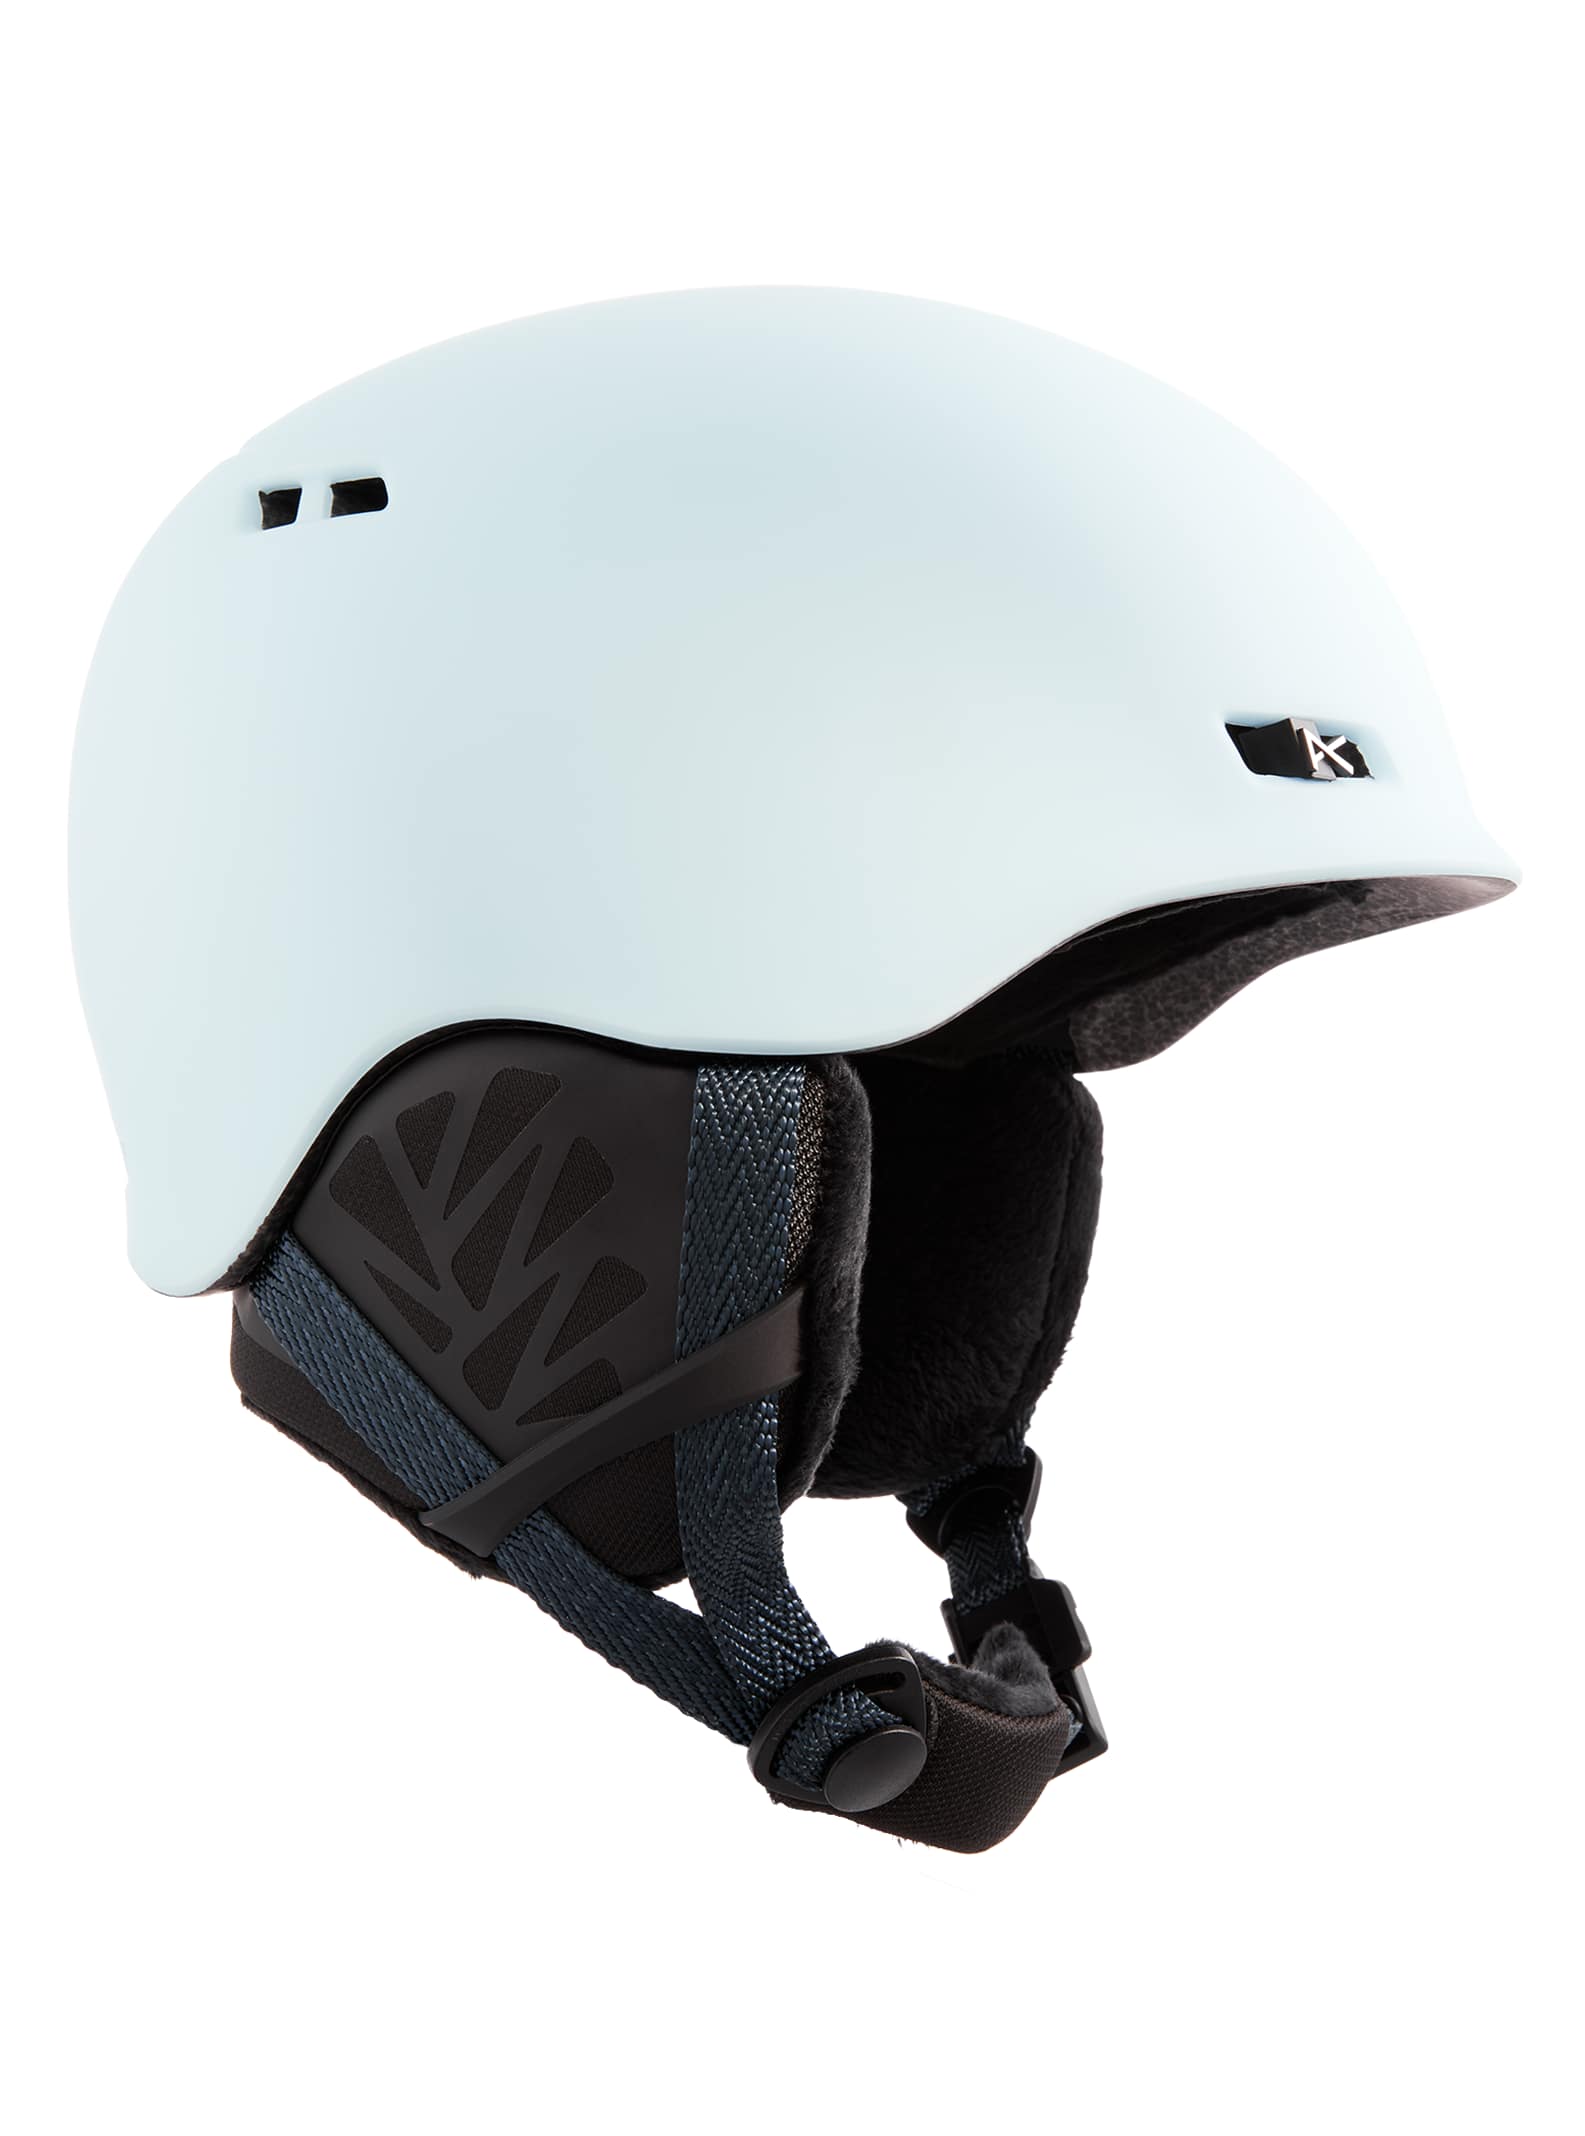 MIPSヘルメット | スキー&スノーボードヘルメット | Anon Optics JP